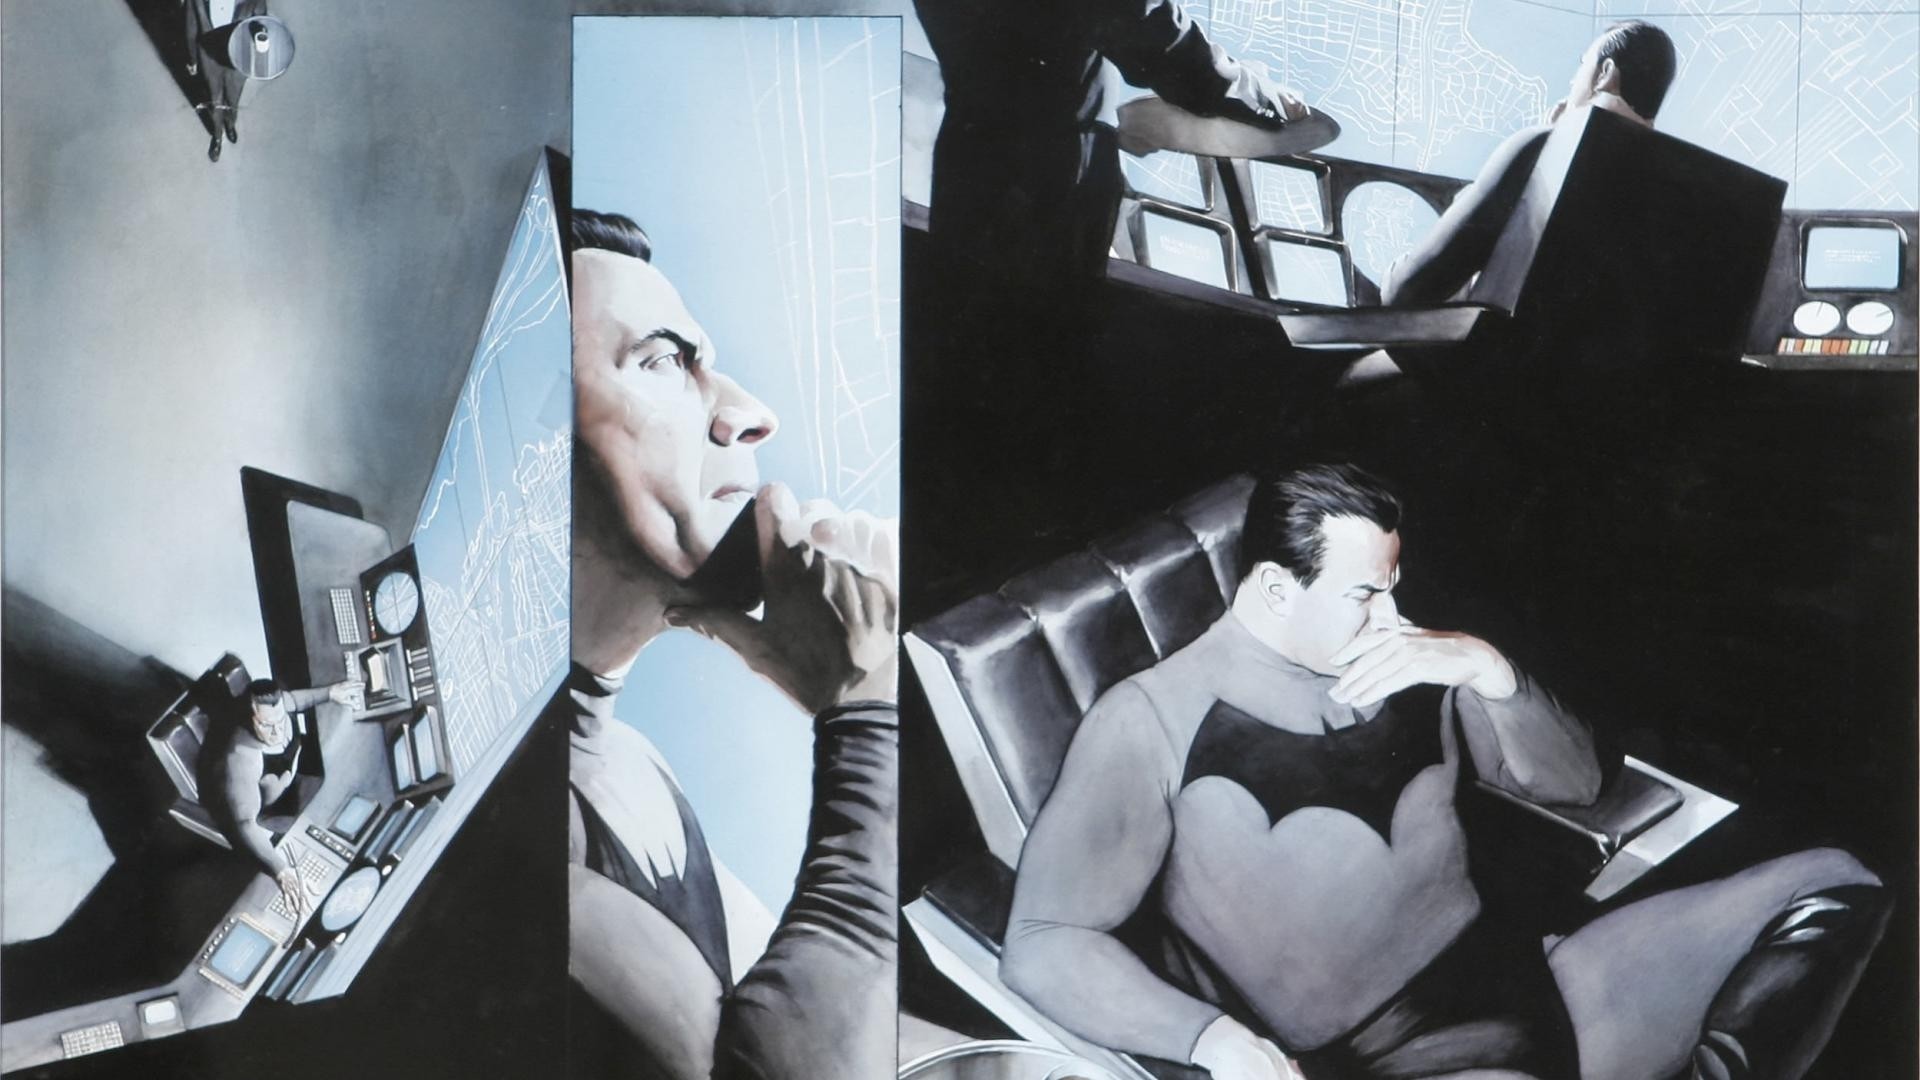 1920x1080 Title : batman comics alex ross wallpaper | (125337) Dimension : 1920 x  1080. File Type : JPG/JPEG